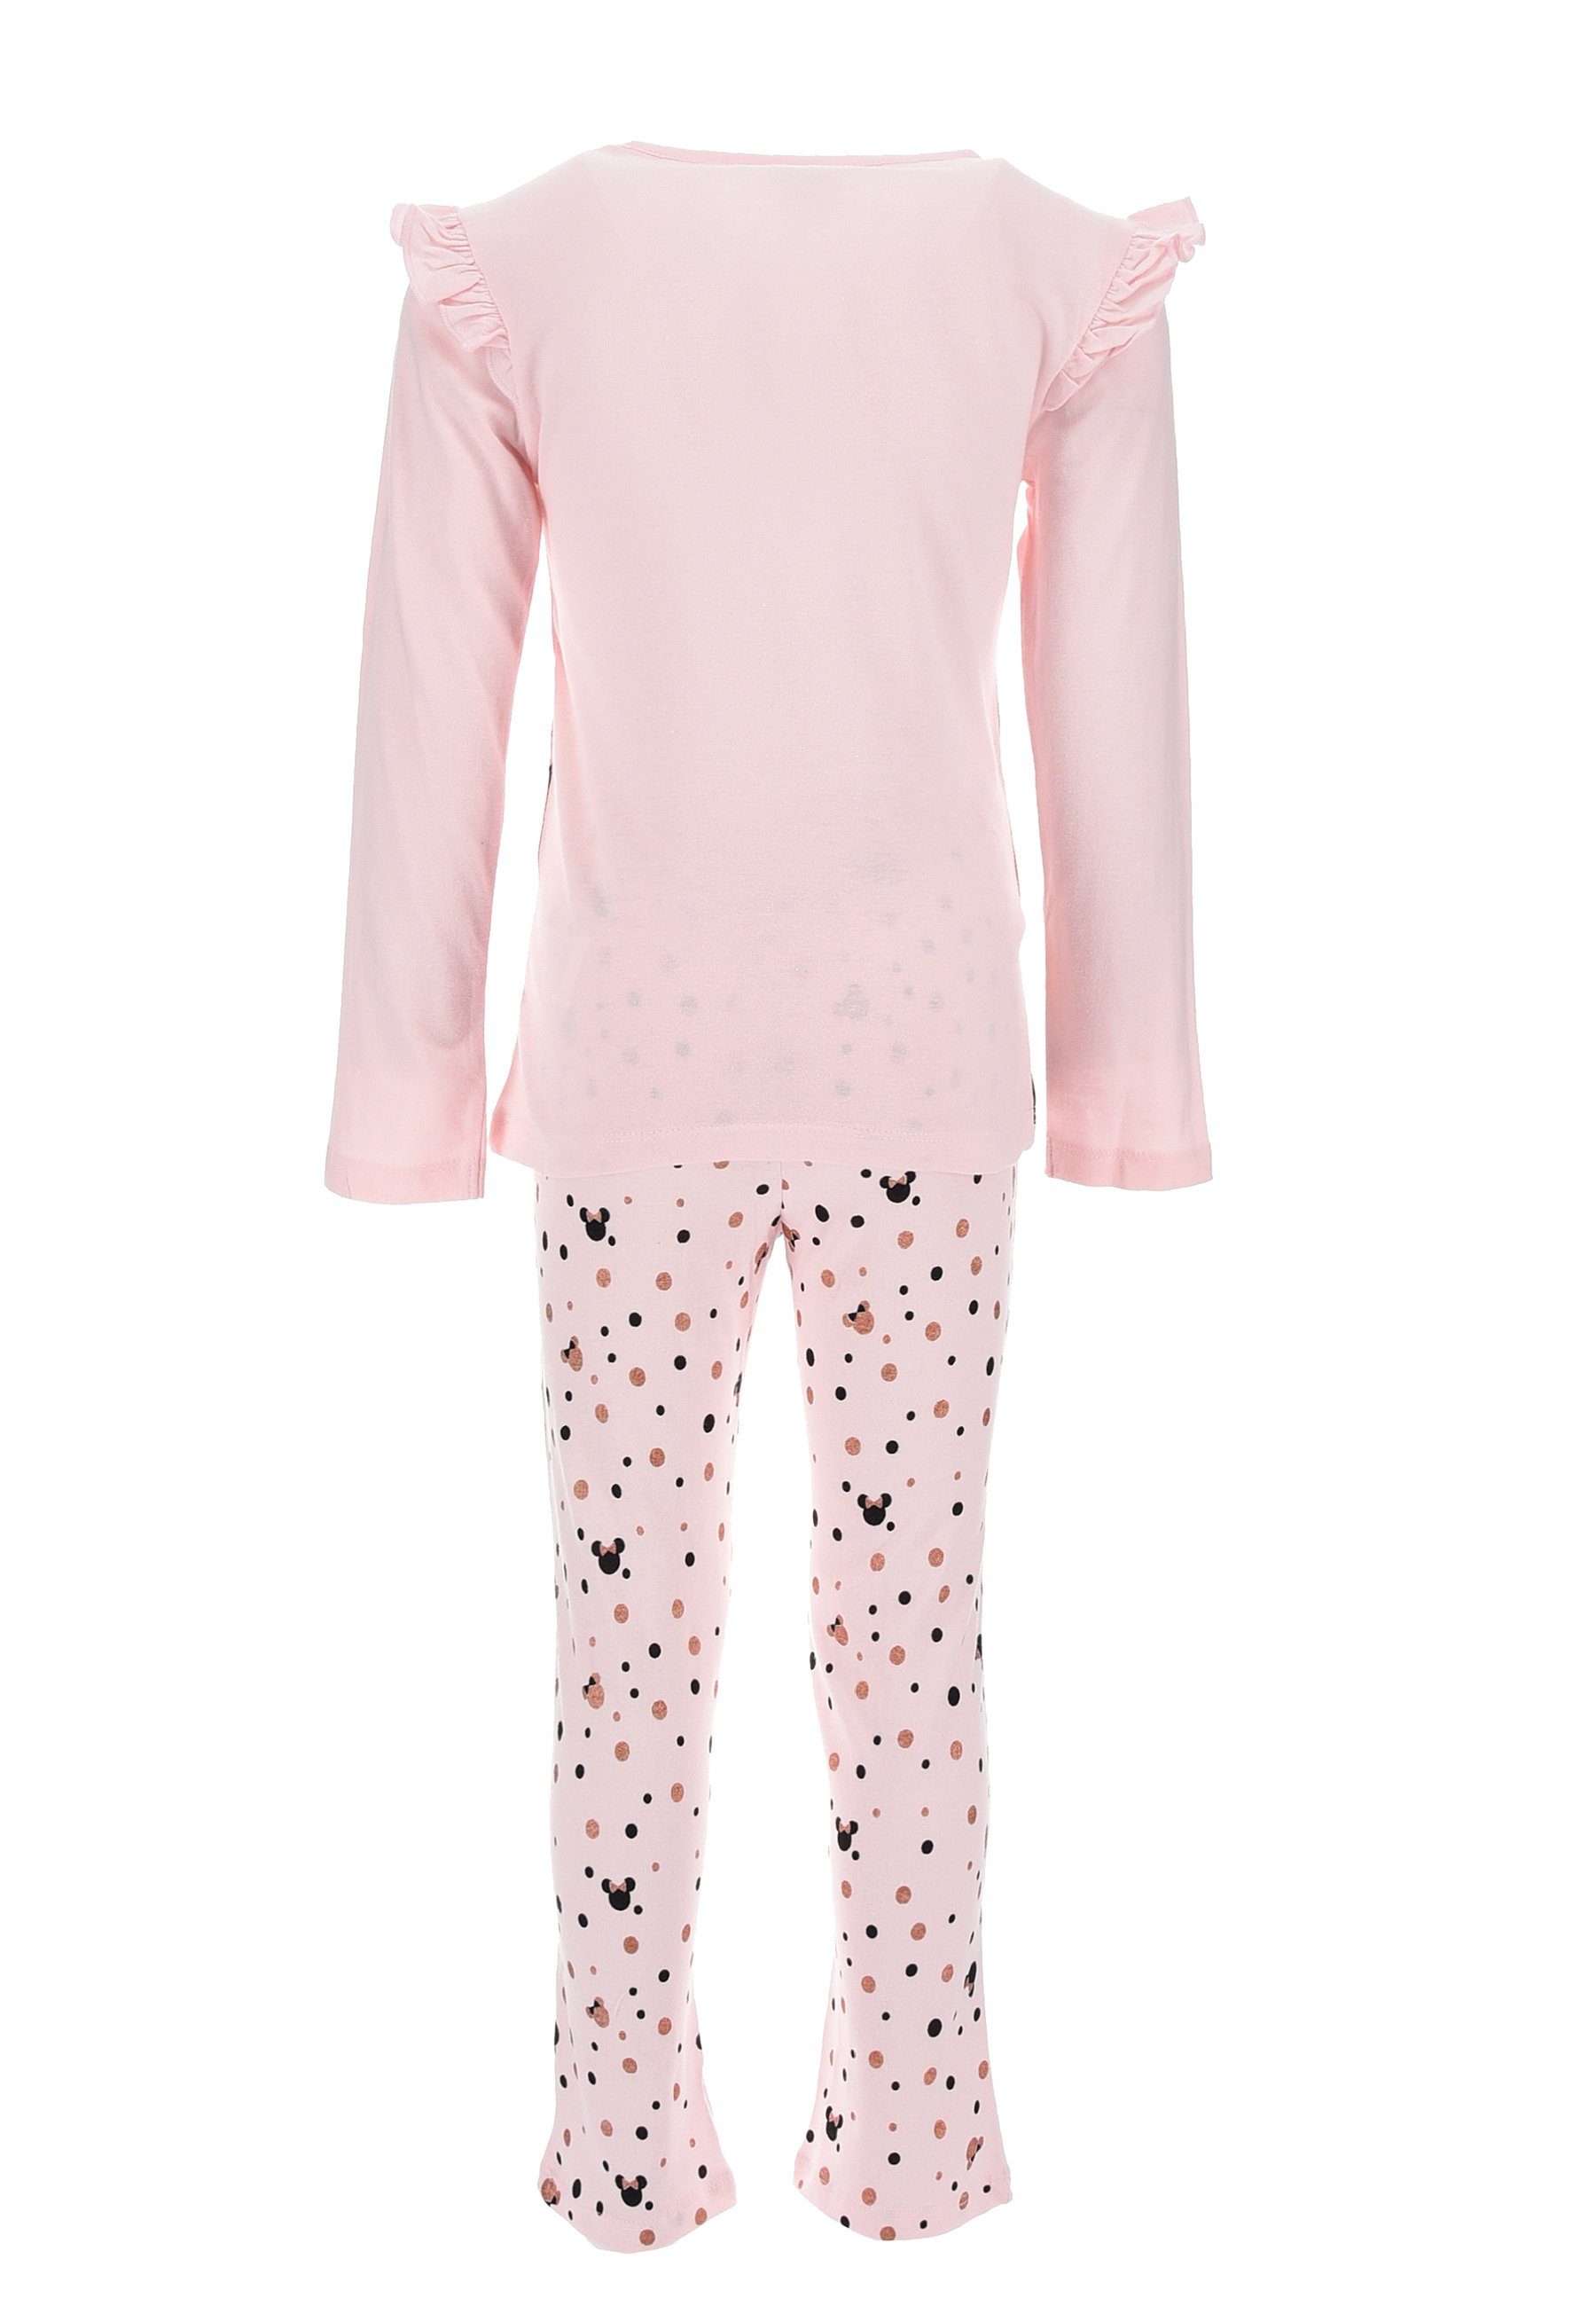 Langarm Schlaf-Hose Rosa Shirt Mouse Mini + Schlafanzug Minnie Kinder Schlafanzug (2 Pyjama Mädchen Kinder tlg) Disney Maus